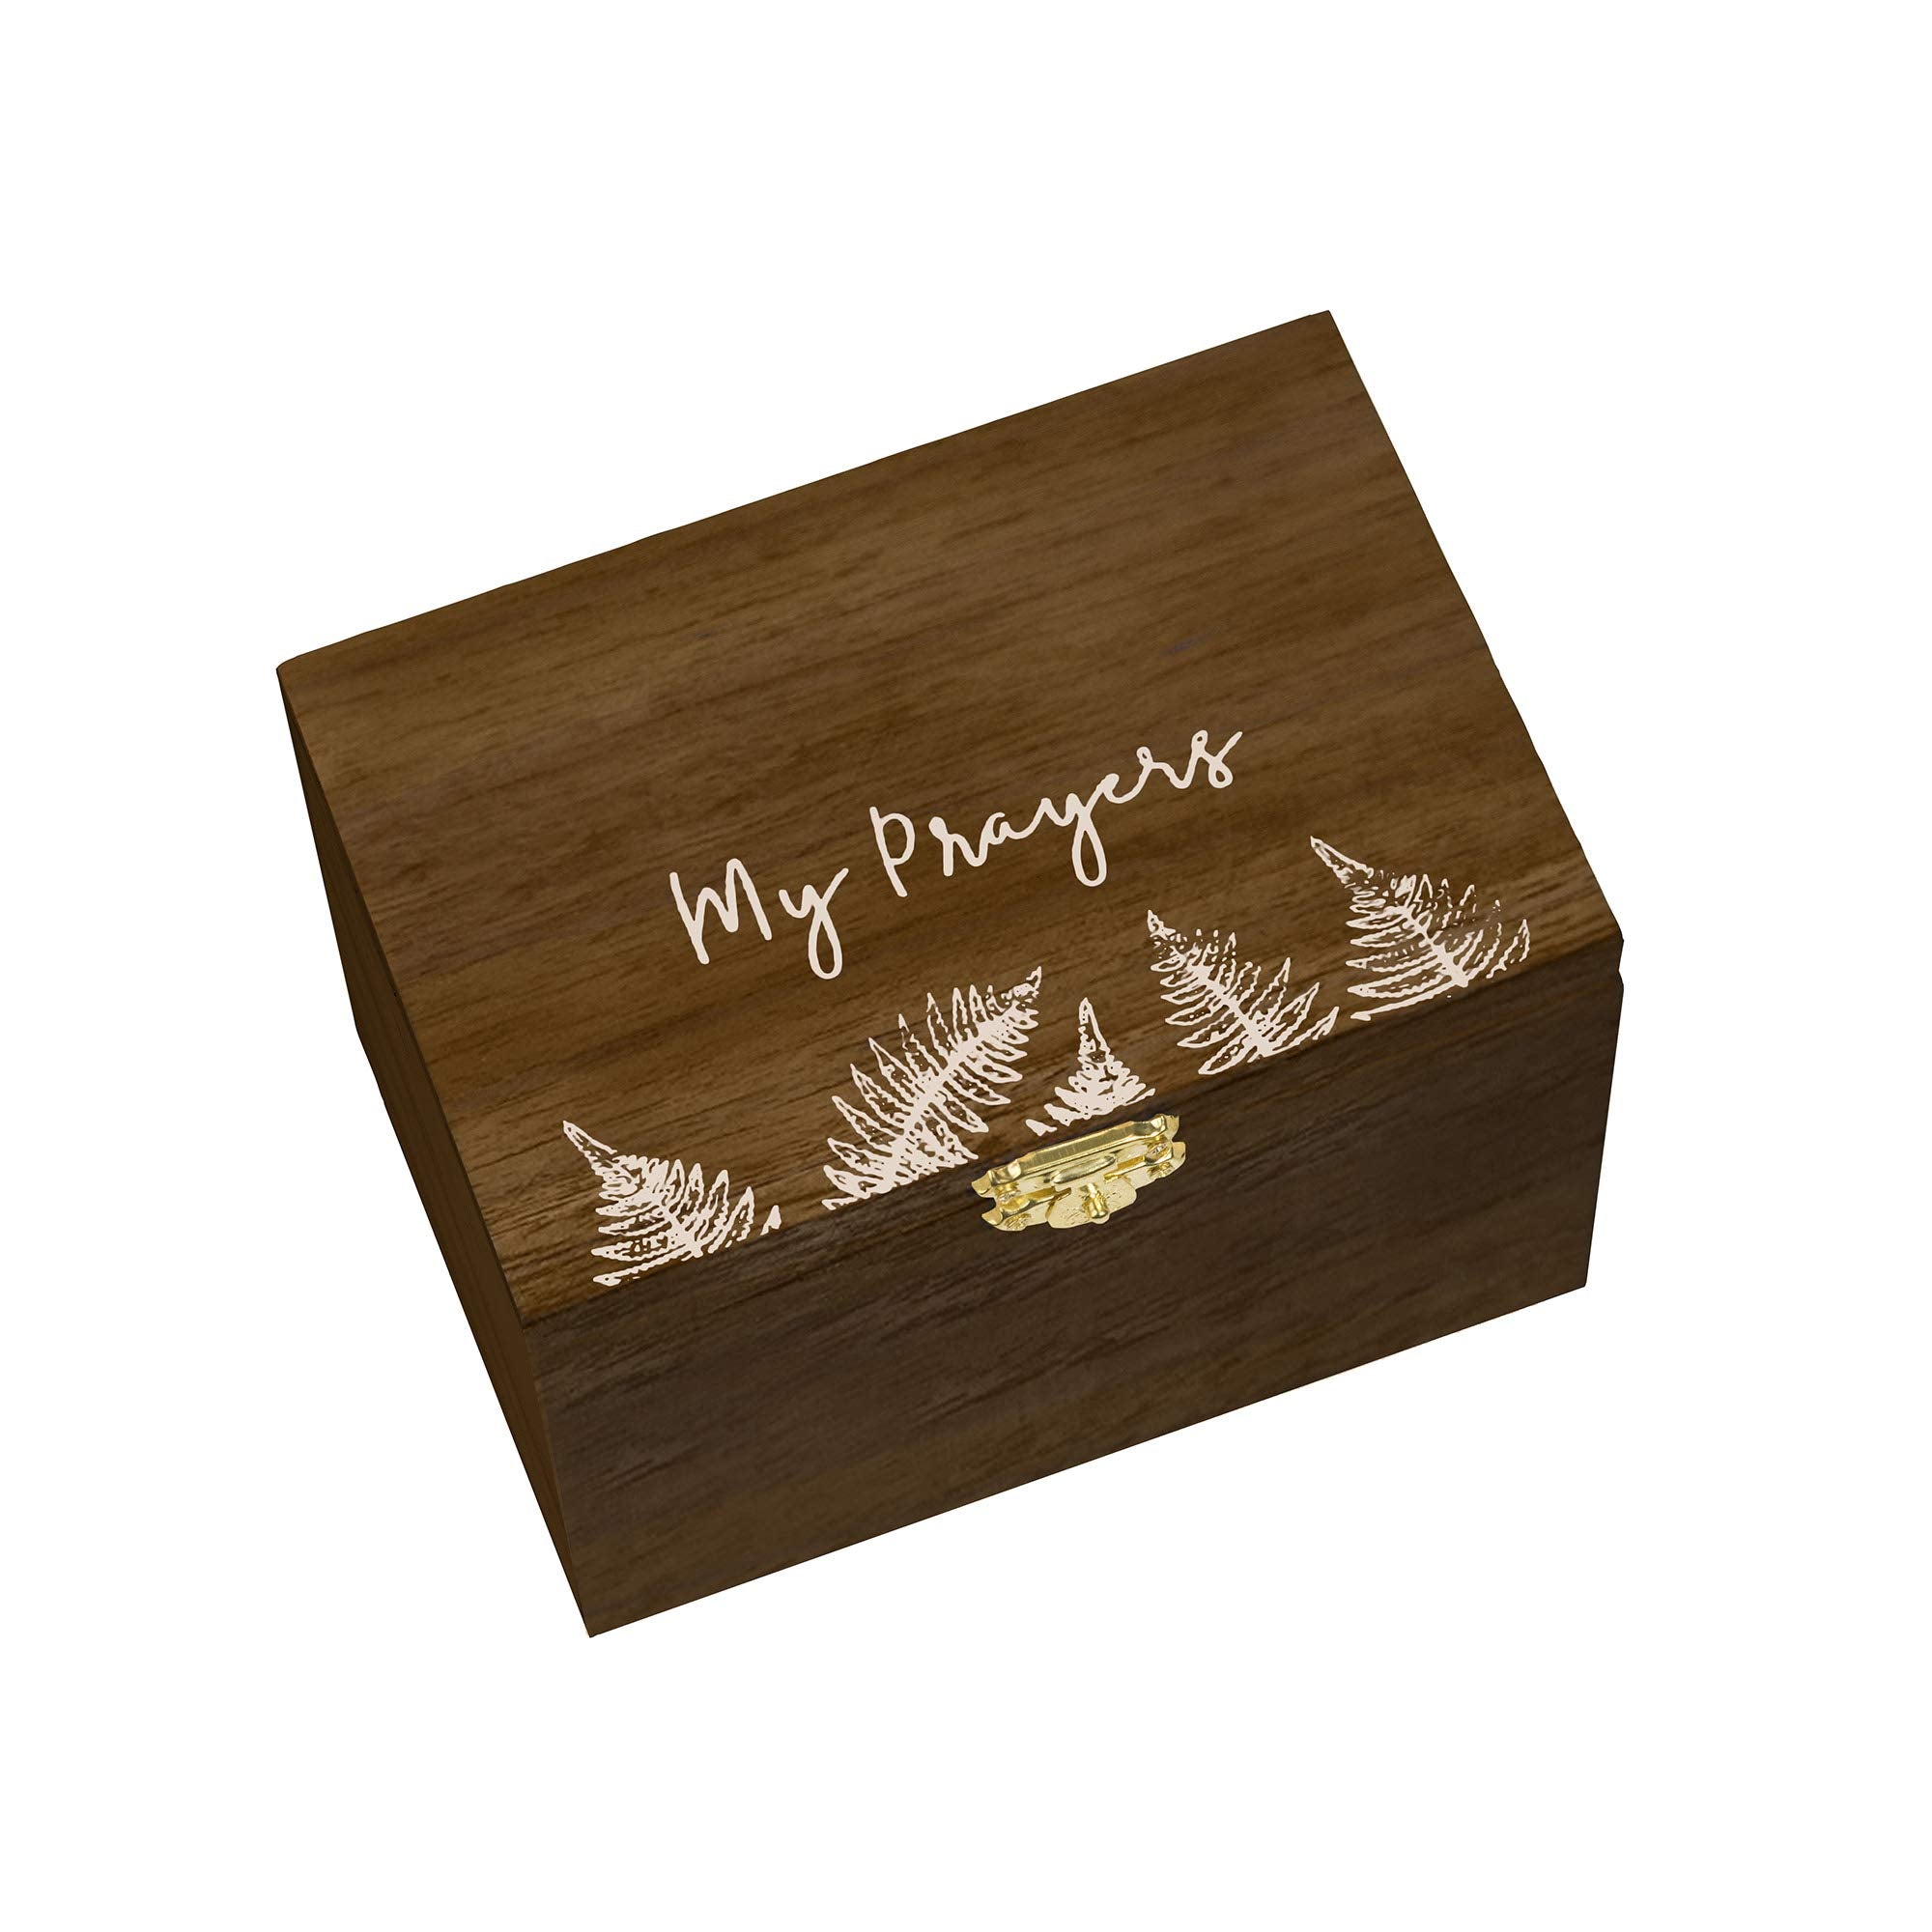 Eccolo Wooden Keepsake Box with Prayer Cards